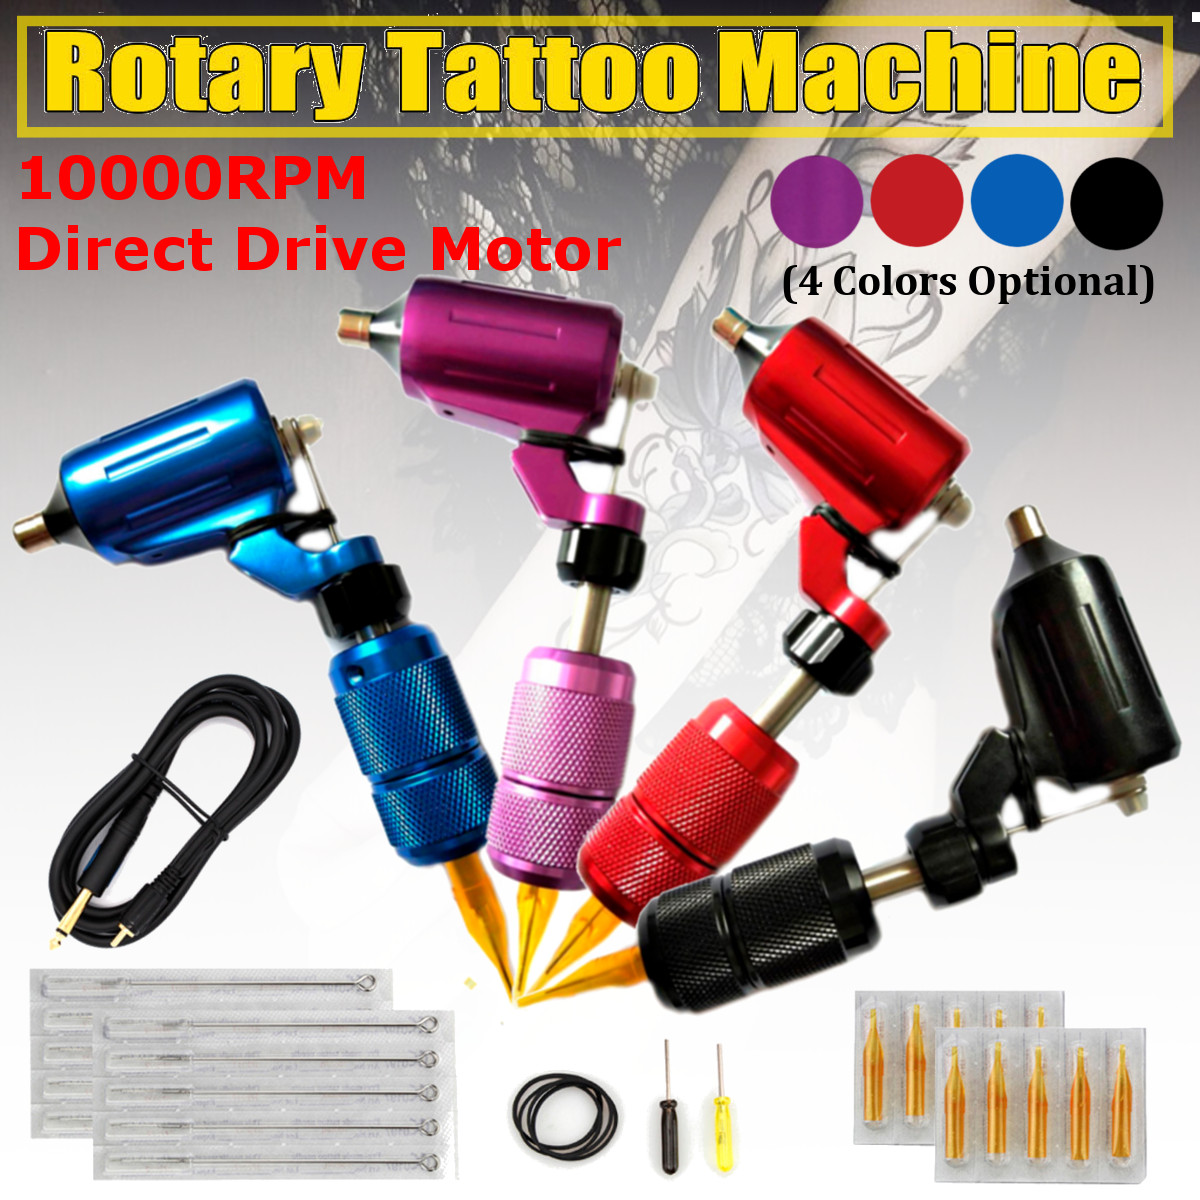 10000RPM-Rotary-Tattoo-Machine-Direct-Drive-Needle-Nozzle-Tips-Supply-Set-1481771